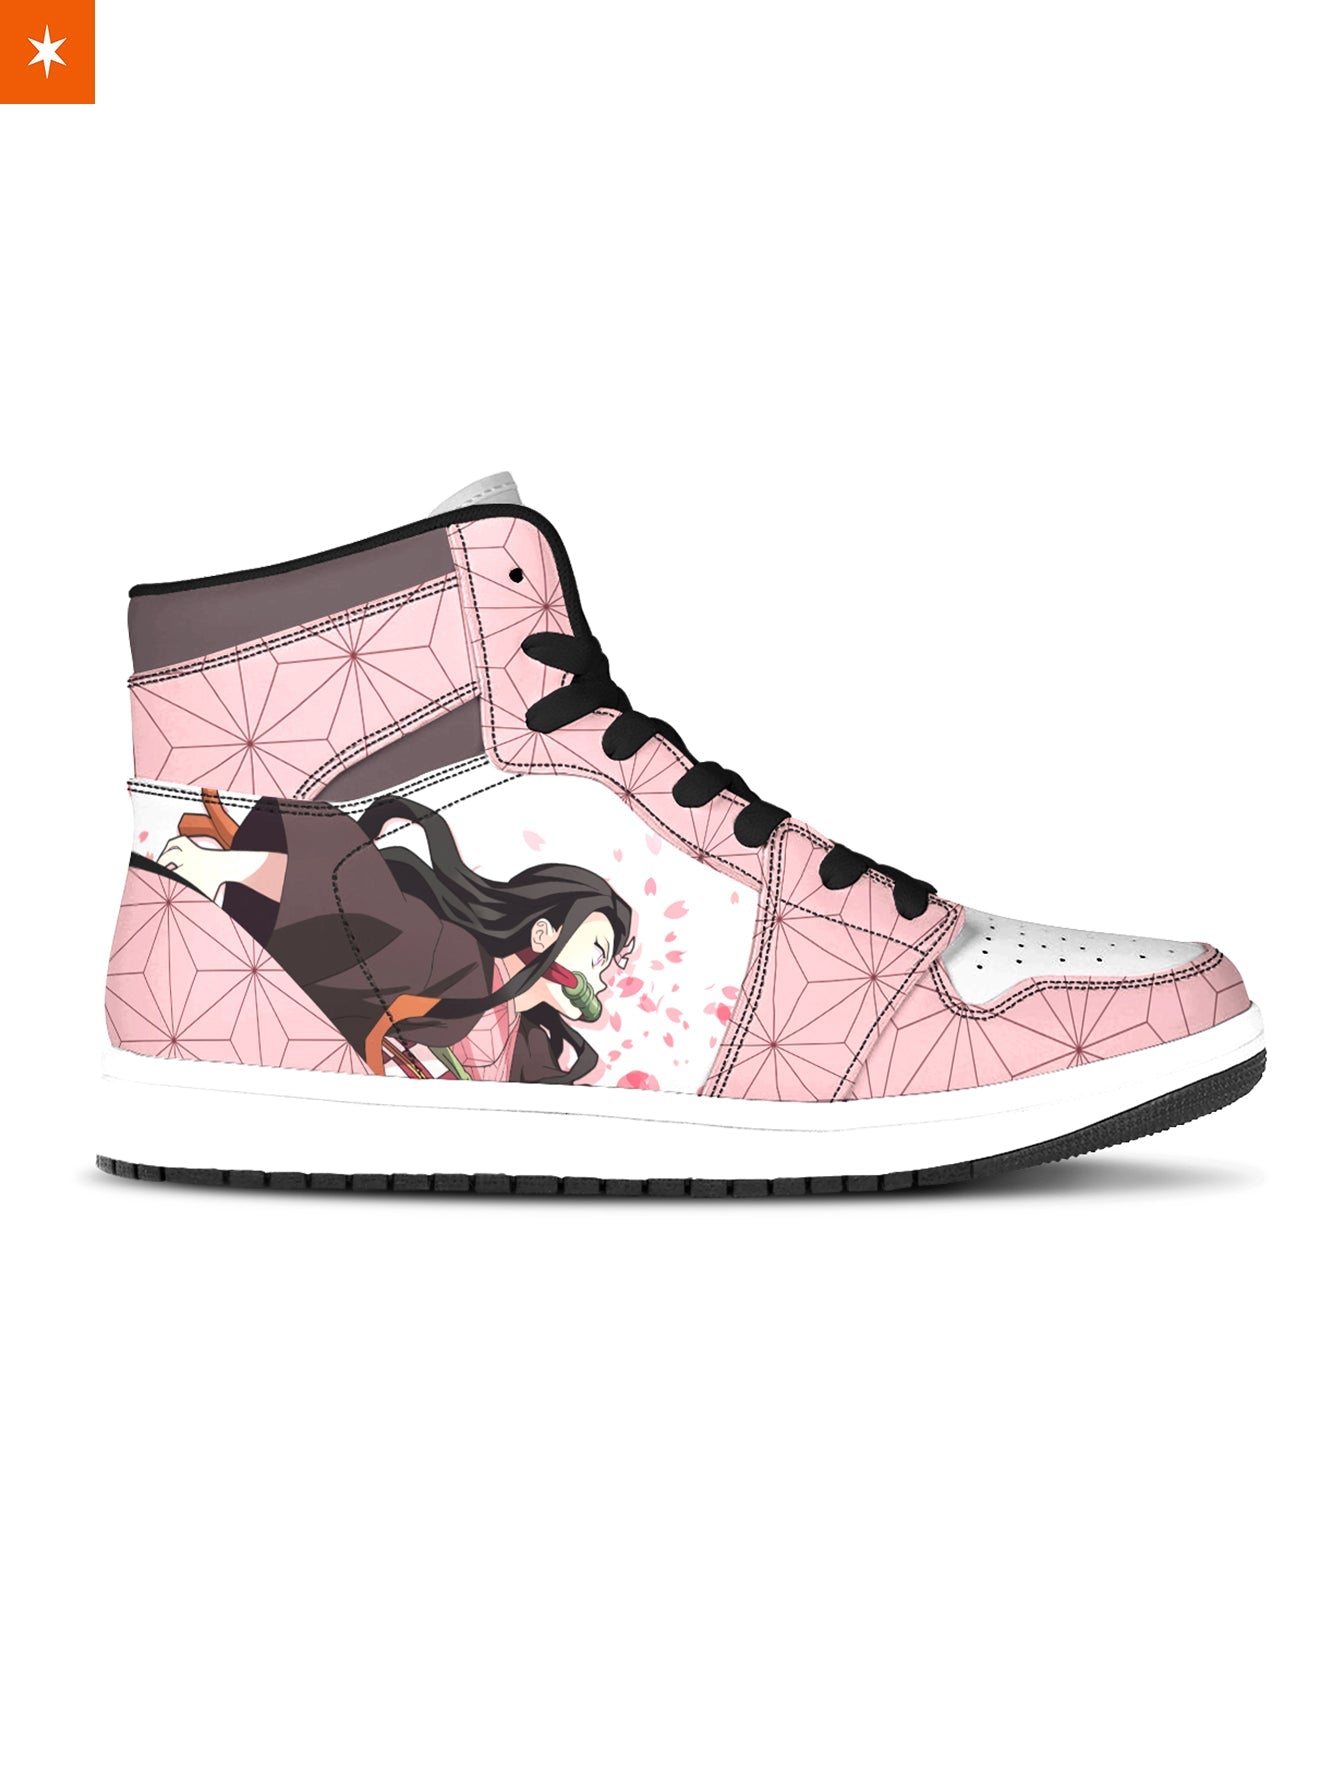 Fukurodani Academy Custom Haikyuu Team Anime Air Jordan Hightop Shoes